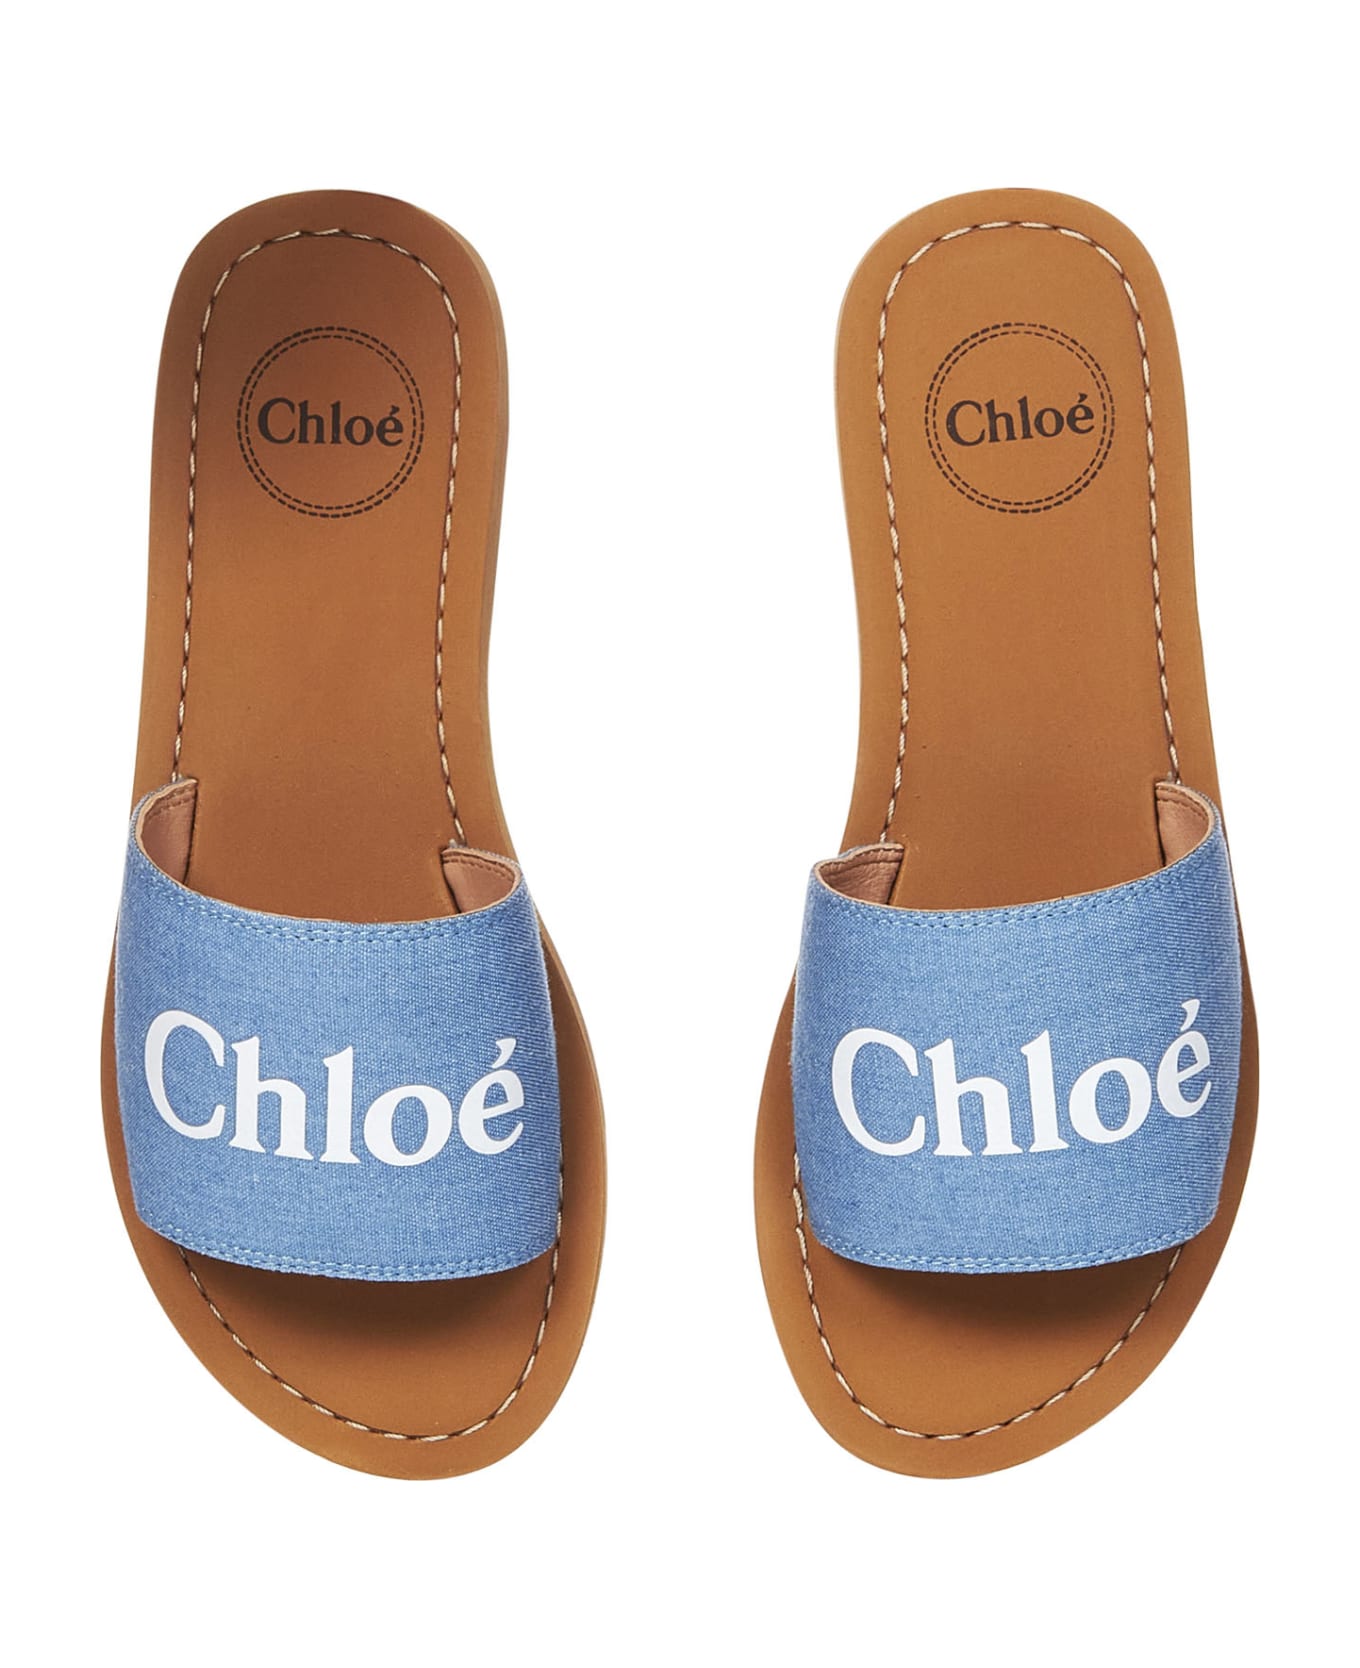 Chloé Sandals - Brown